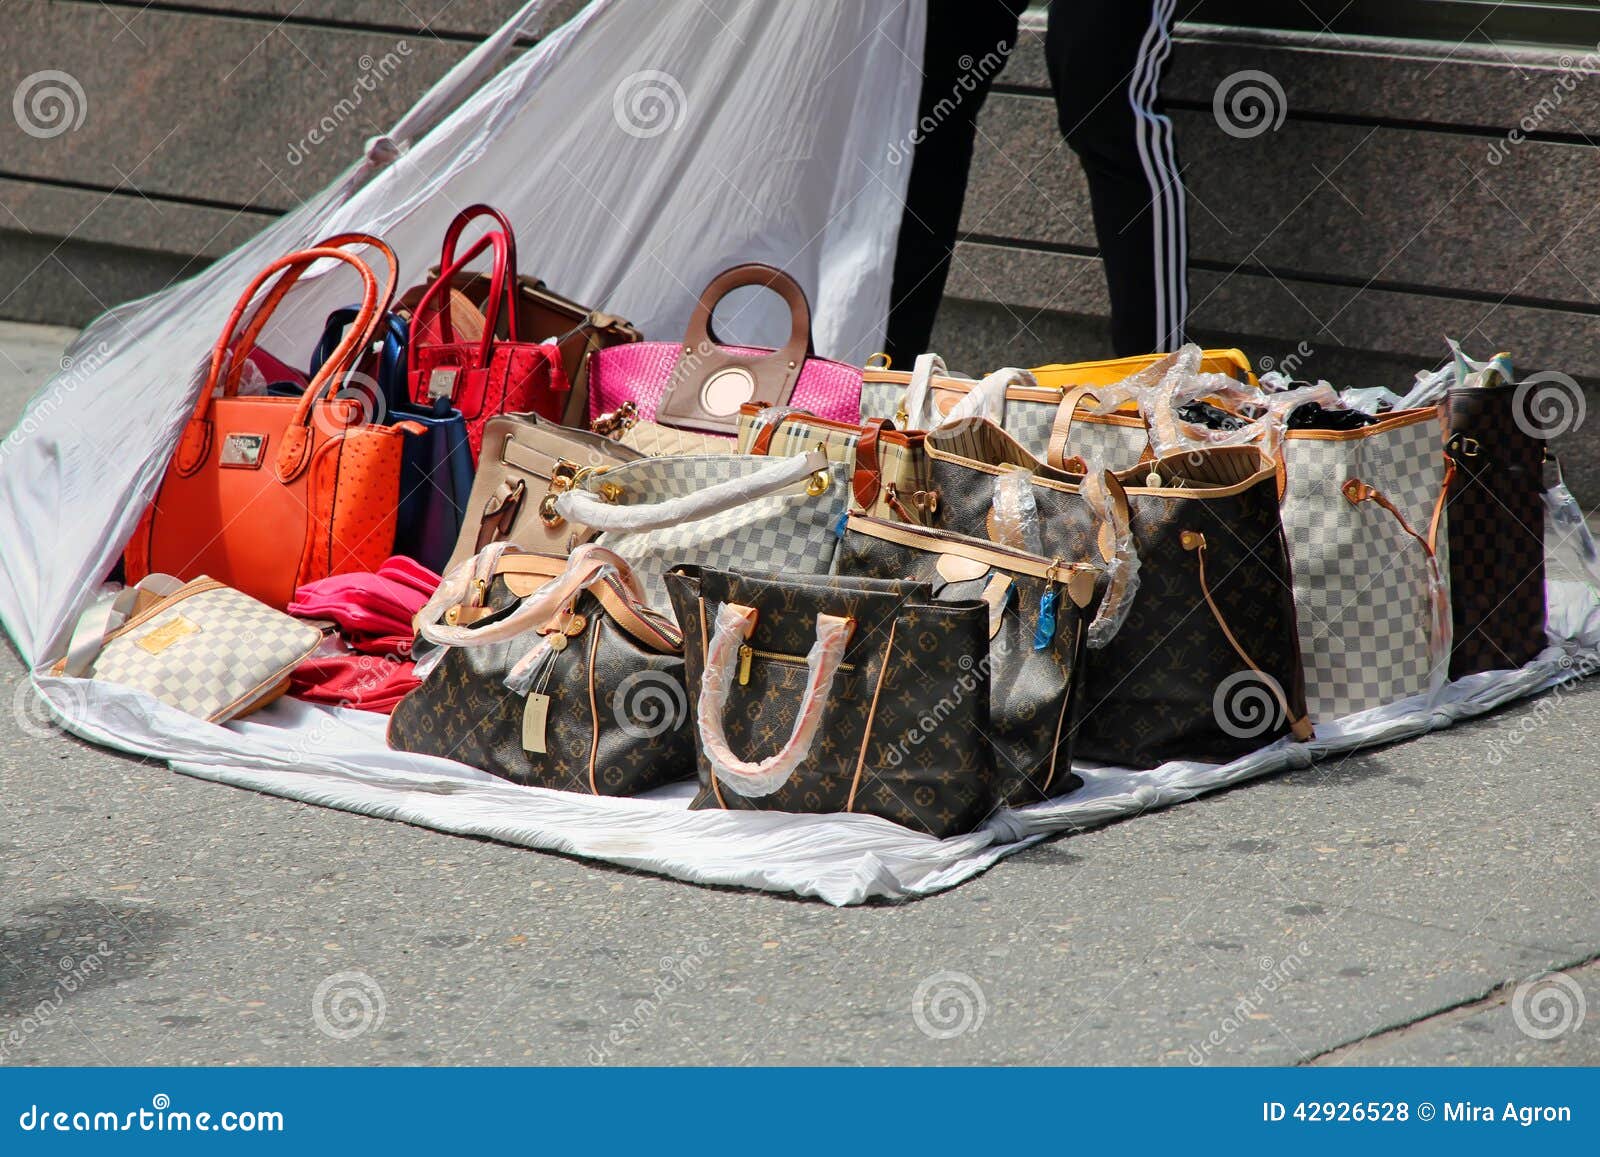 Fake Handbags Editorial Stock Photo - Image: 42926528